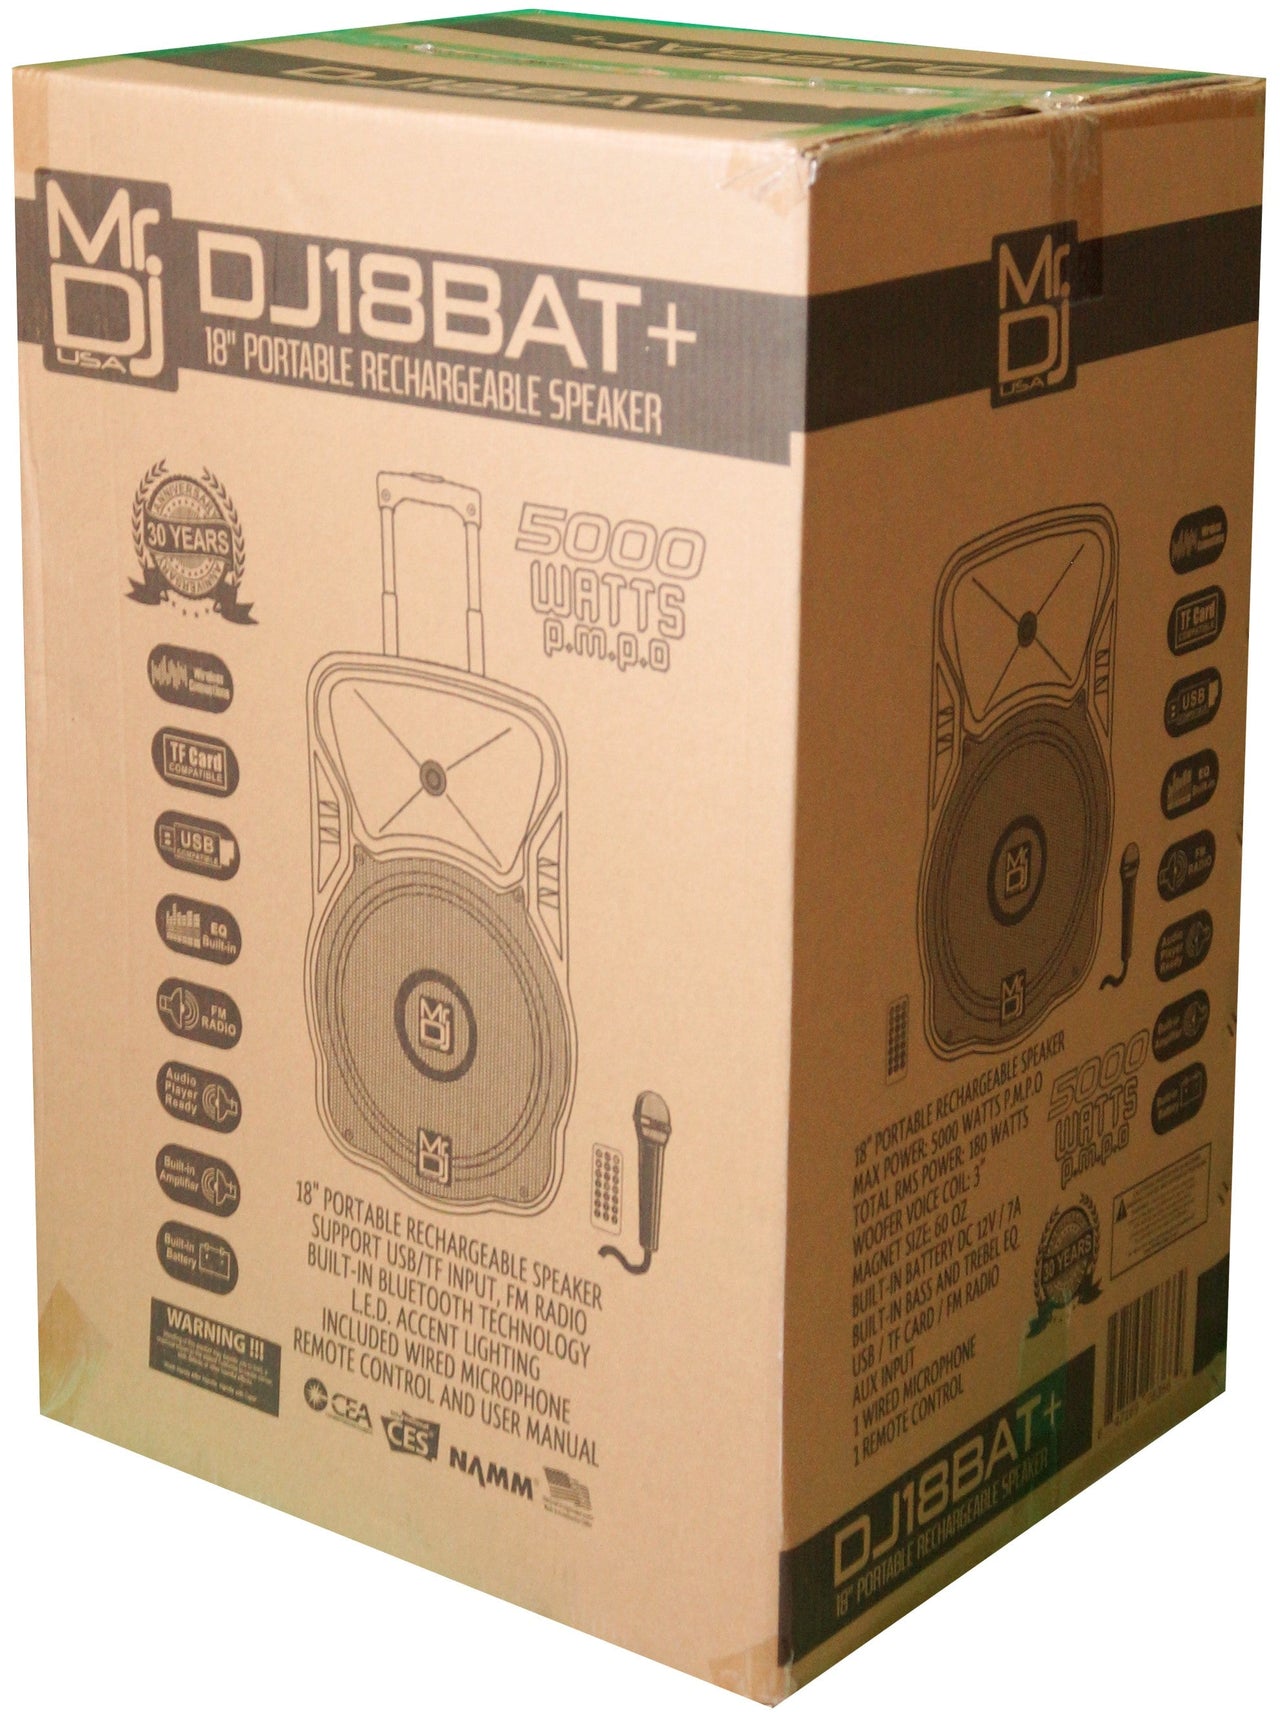 2 MR DJ DJ18BAT+ 18" Portable Bluetooth Speaker + Speaker Stand